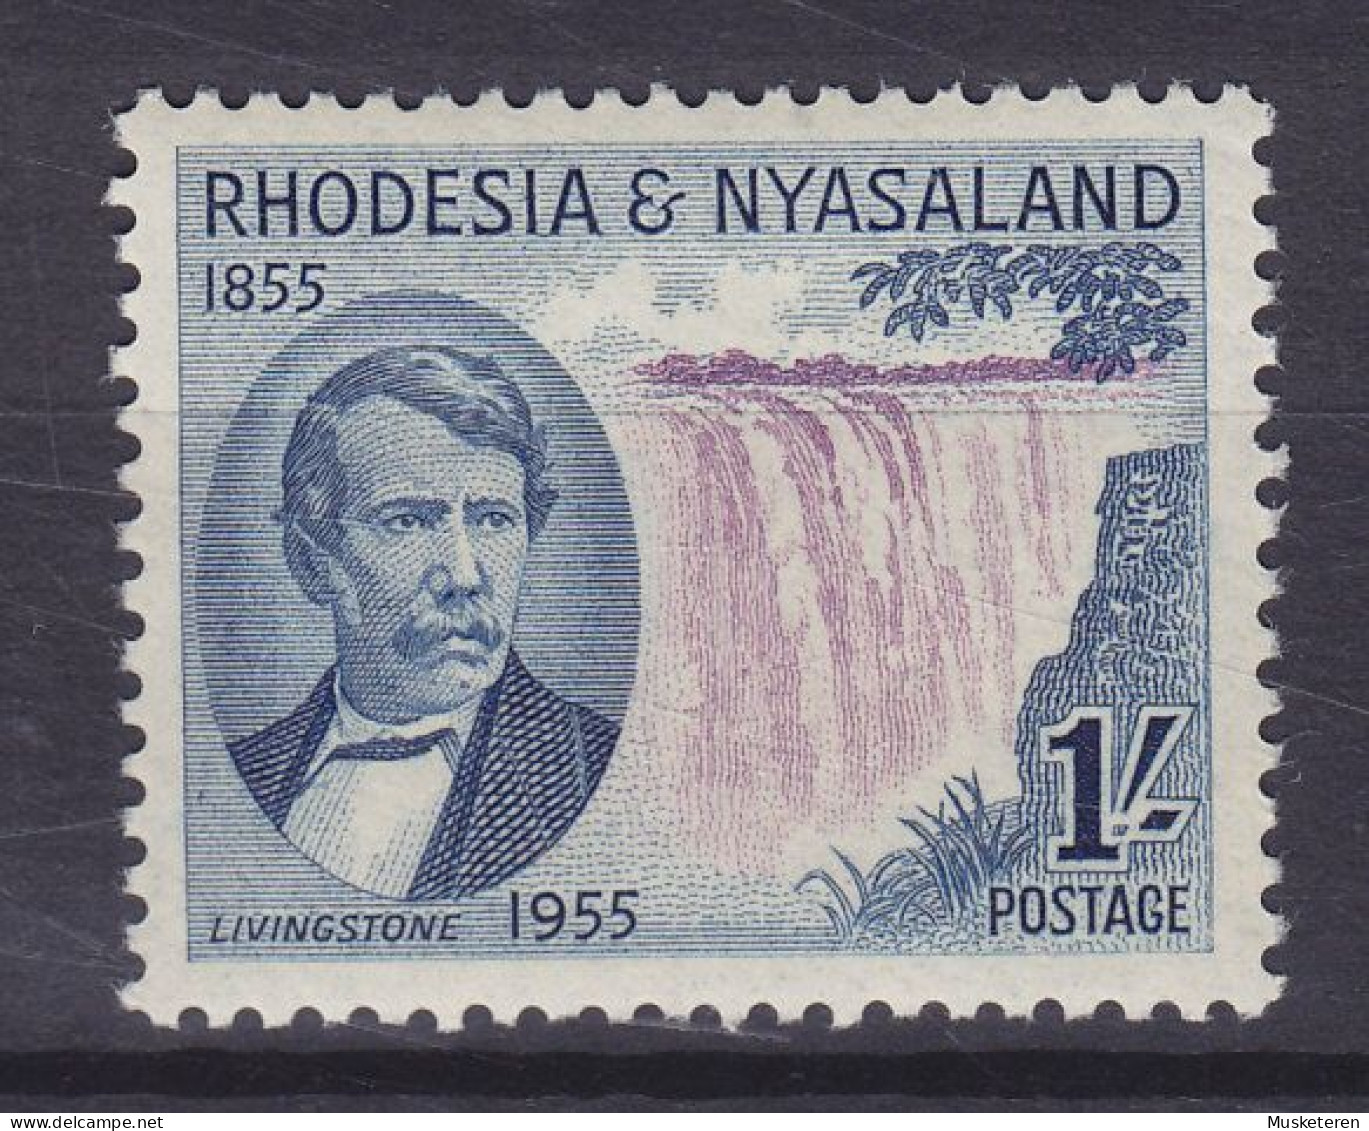 Rhodesia & Nyassaland 1955 Mi. 18, 1 Sh. David Livingstone & Victoria Falls, MNH** - Rhodesia & Nyasaland (1954-1963)